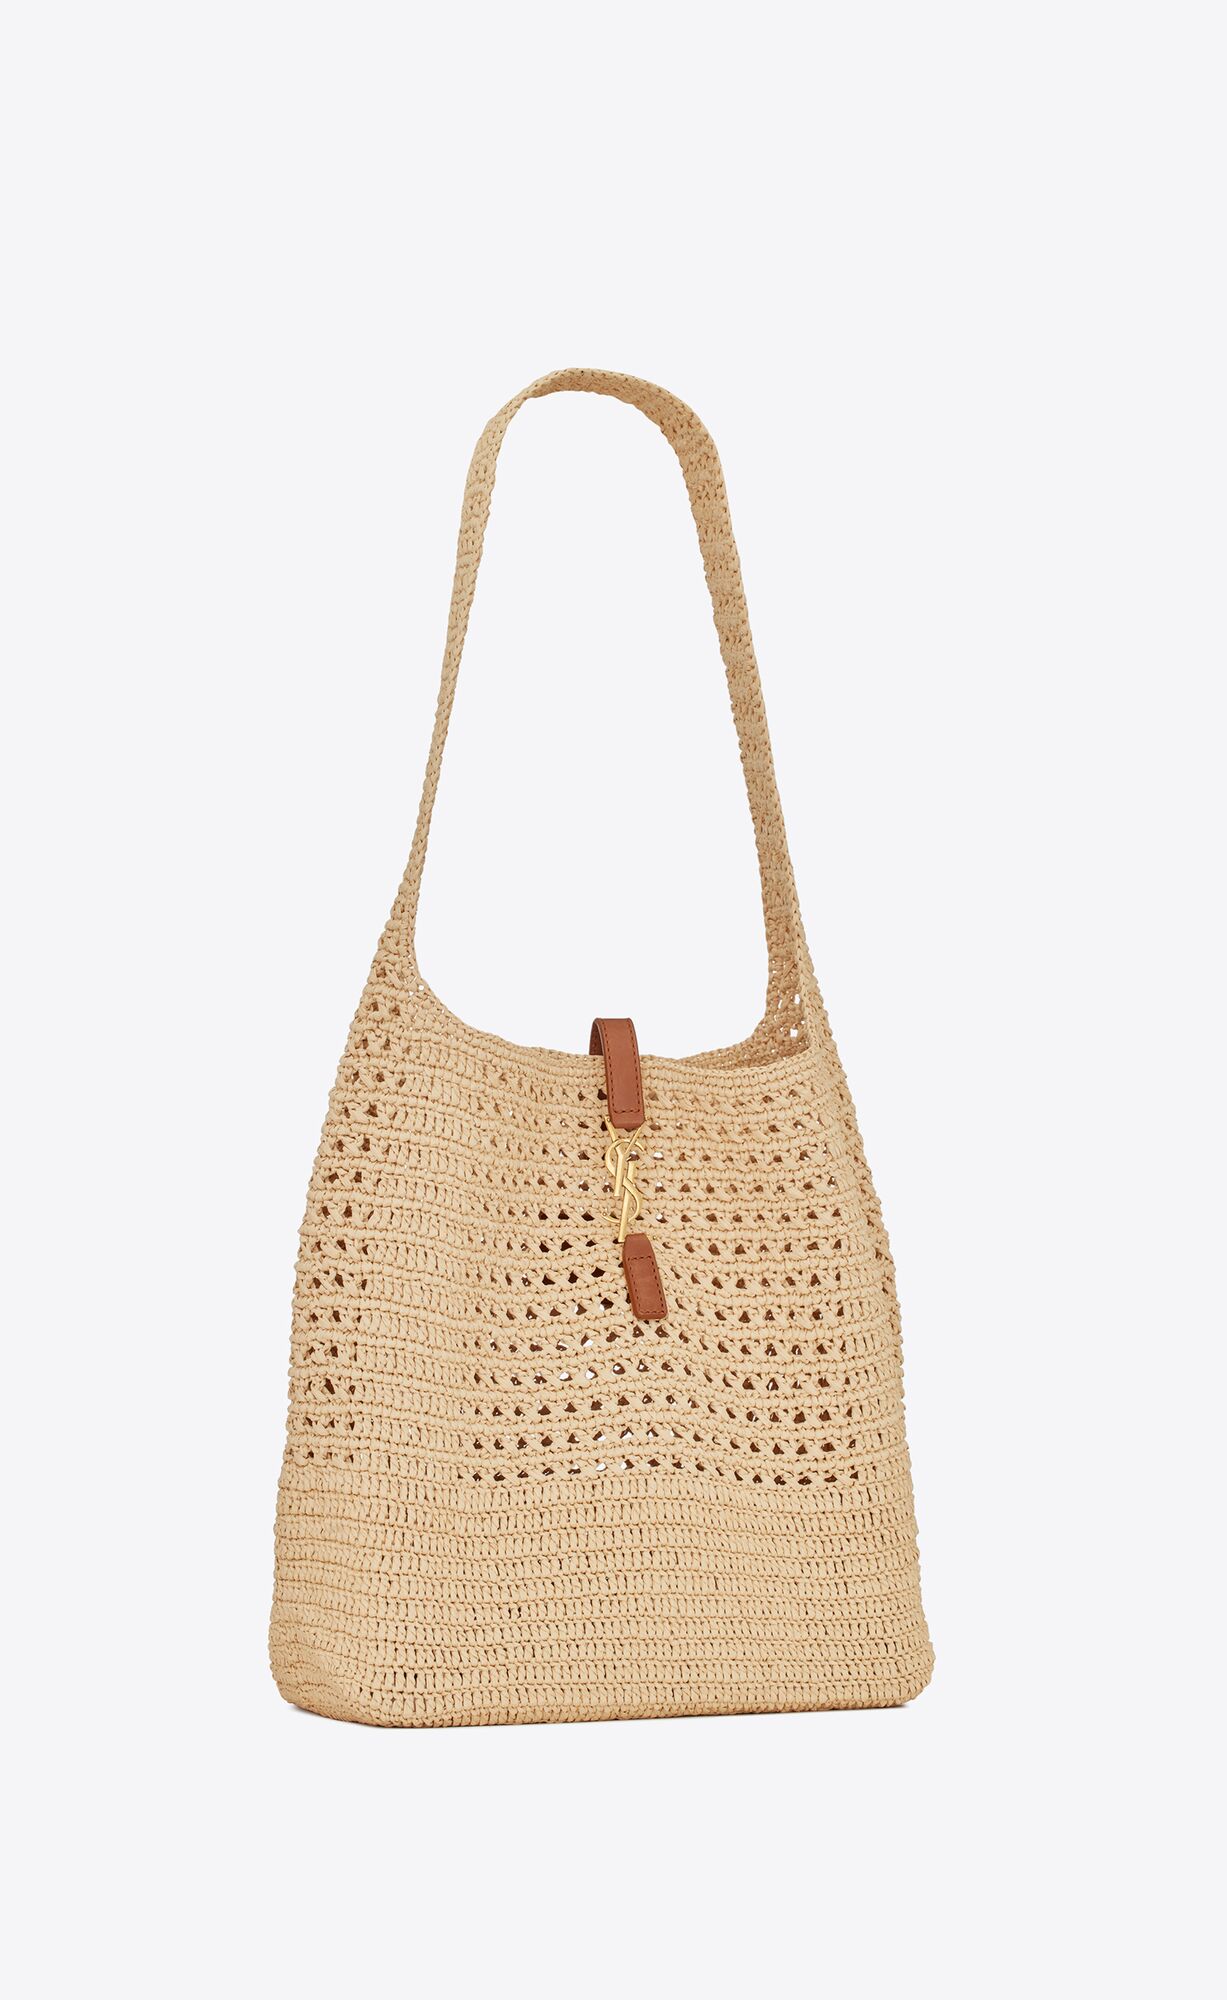 Minimalist Straw Bag For Women Summer Beach Woven Tote Hobo